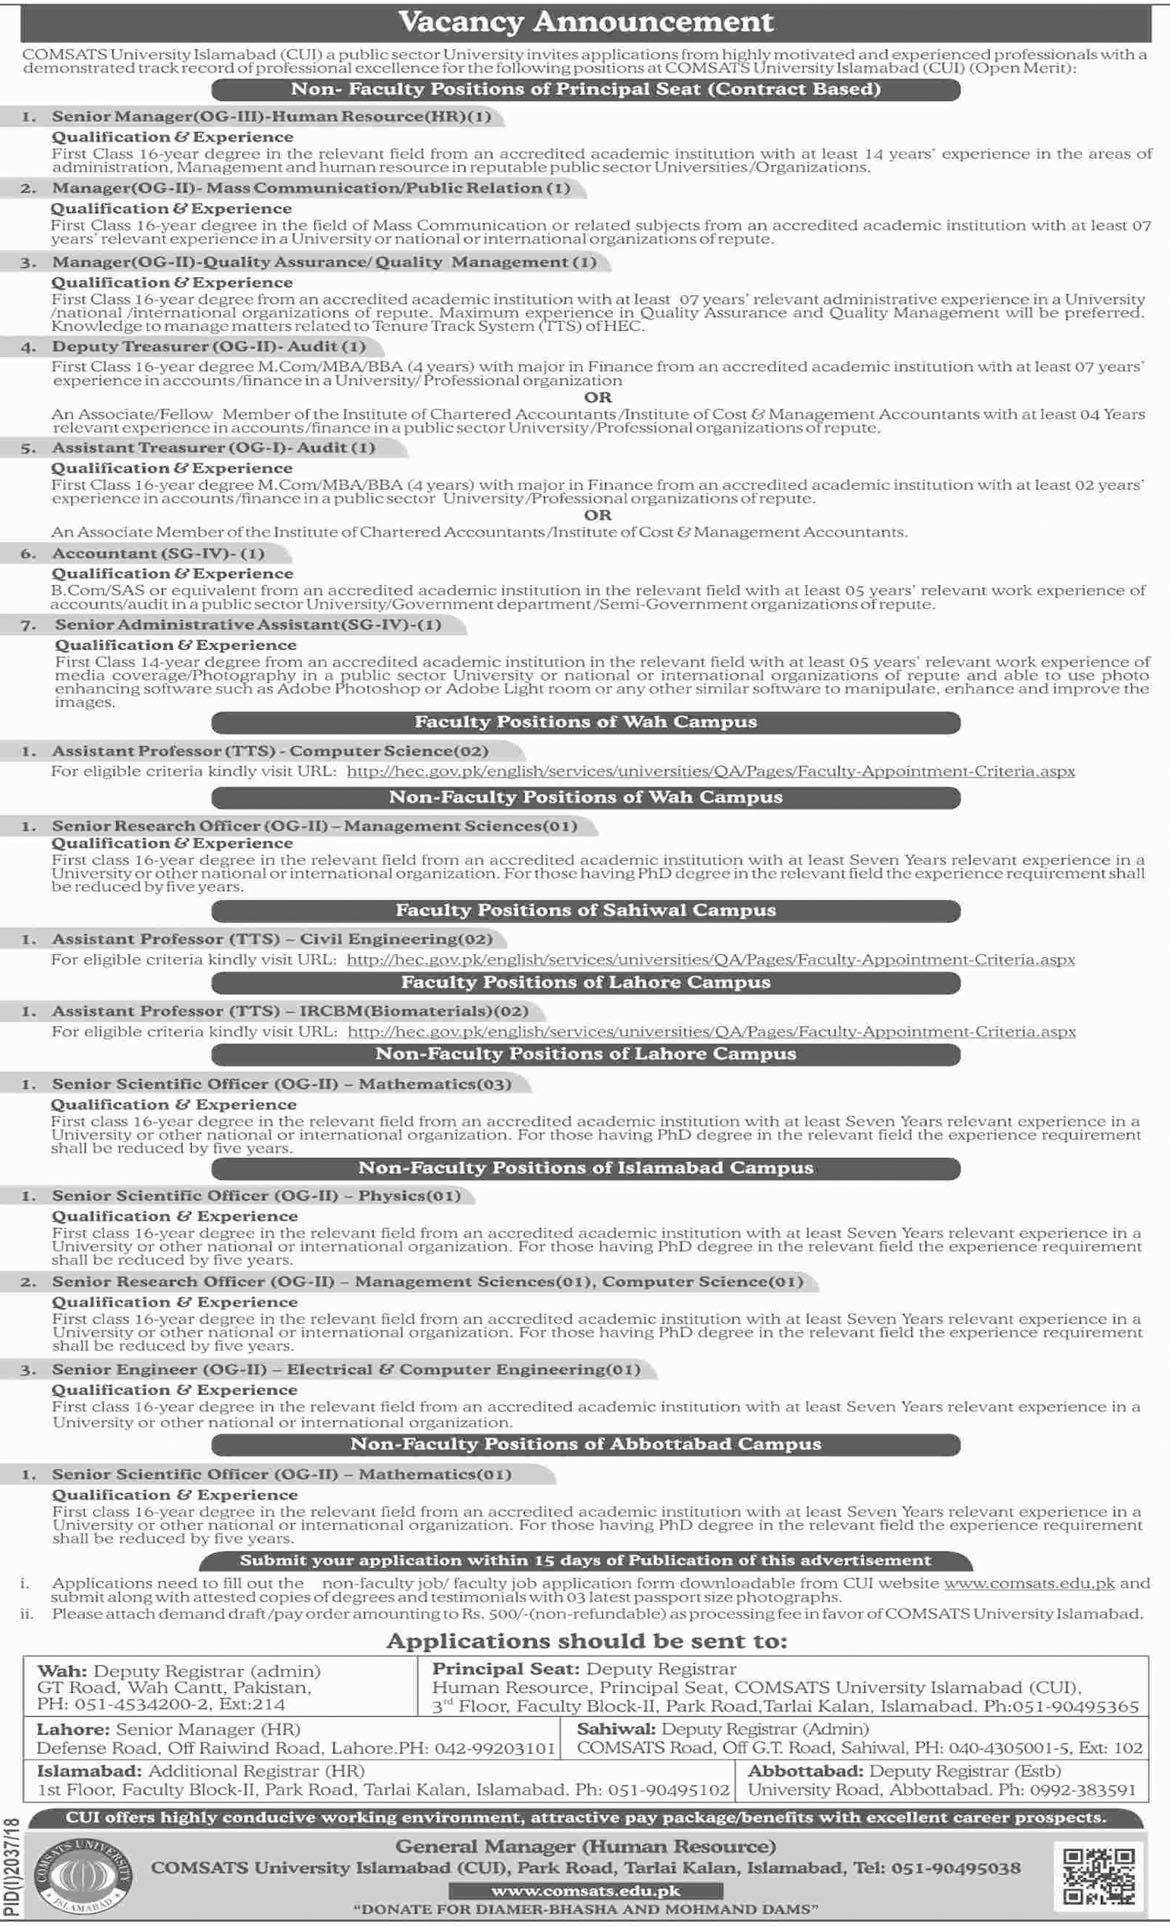 Jobs In COMSATS University Islamabad 07 Nov 2018